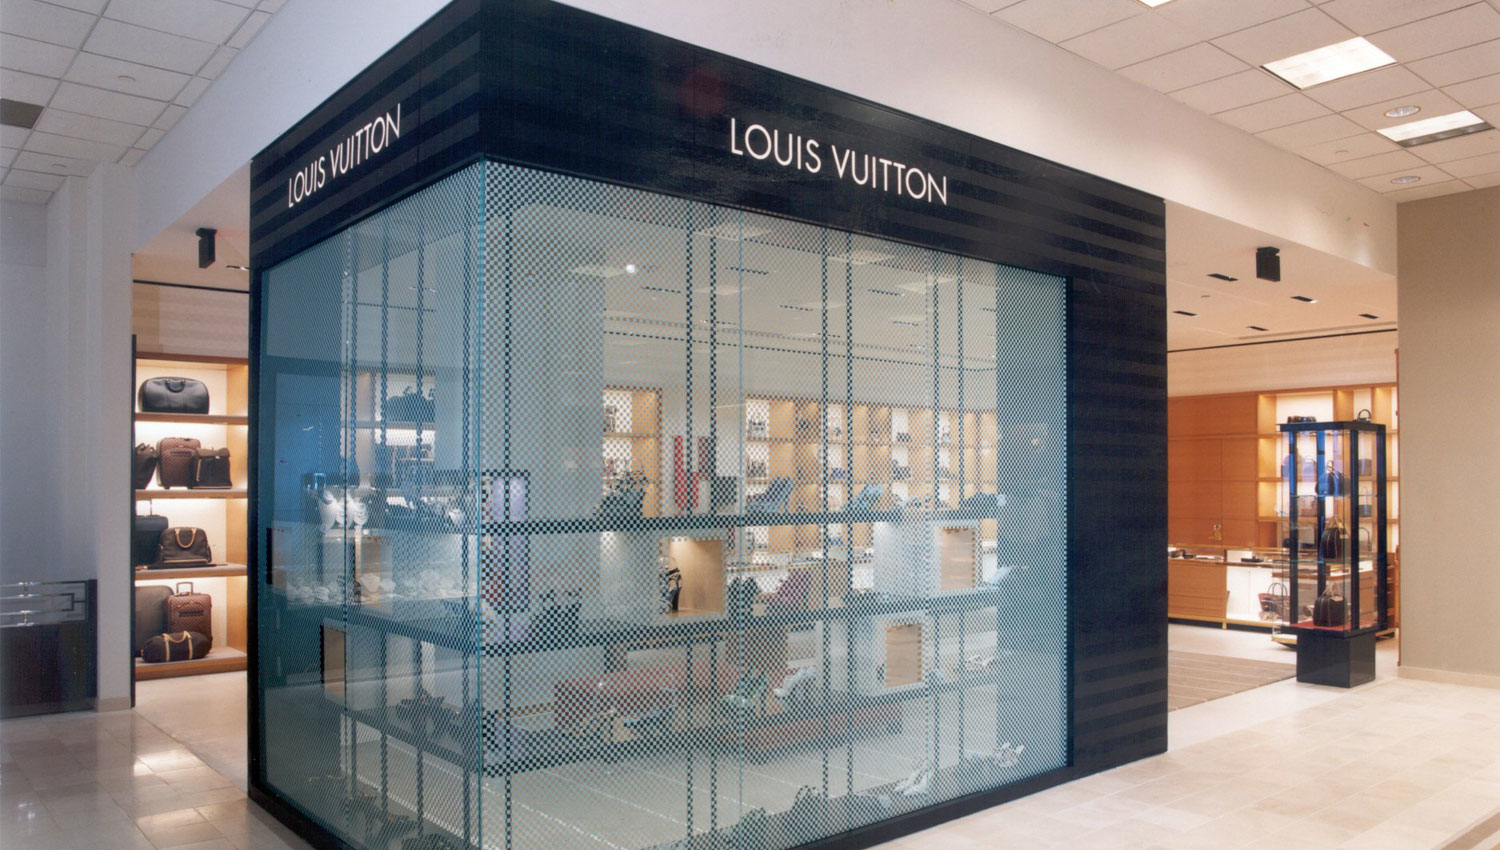 Louis Vuitton McLean Neiman Marcus Tysons Corner Coupons McLean VA near me | 8coupons